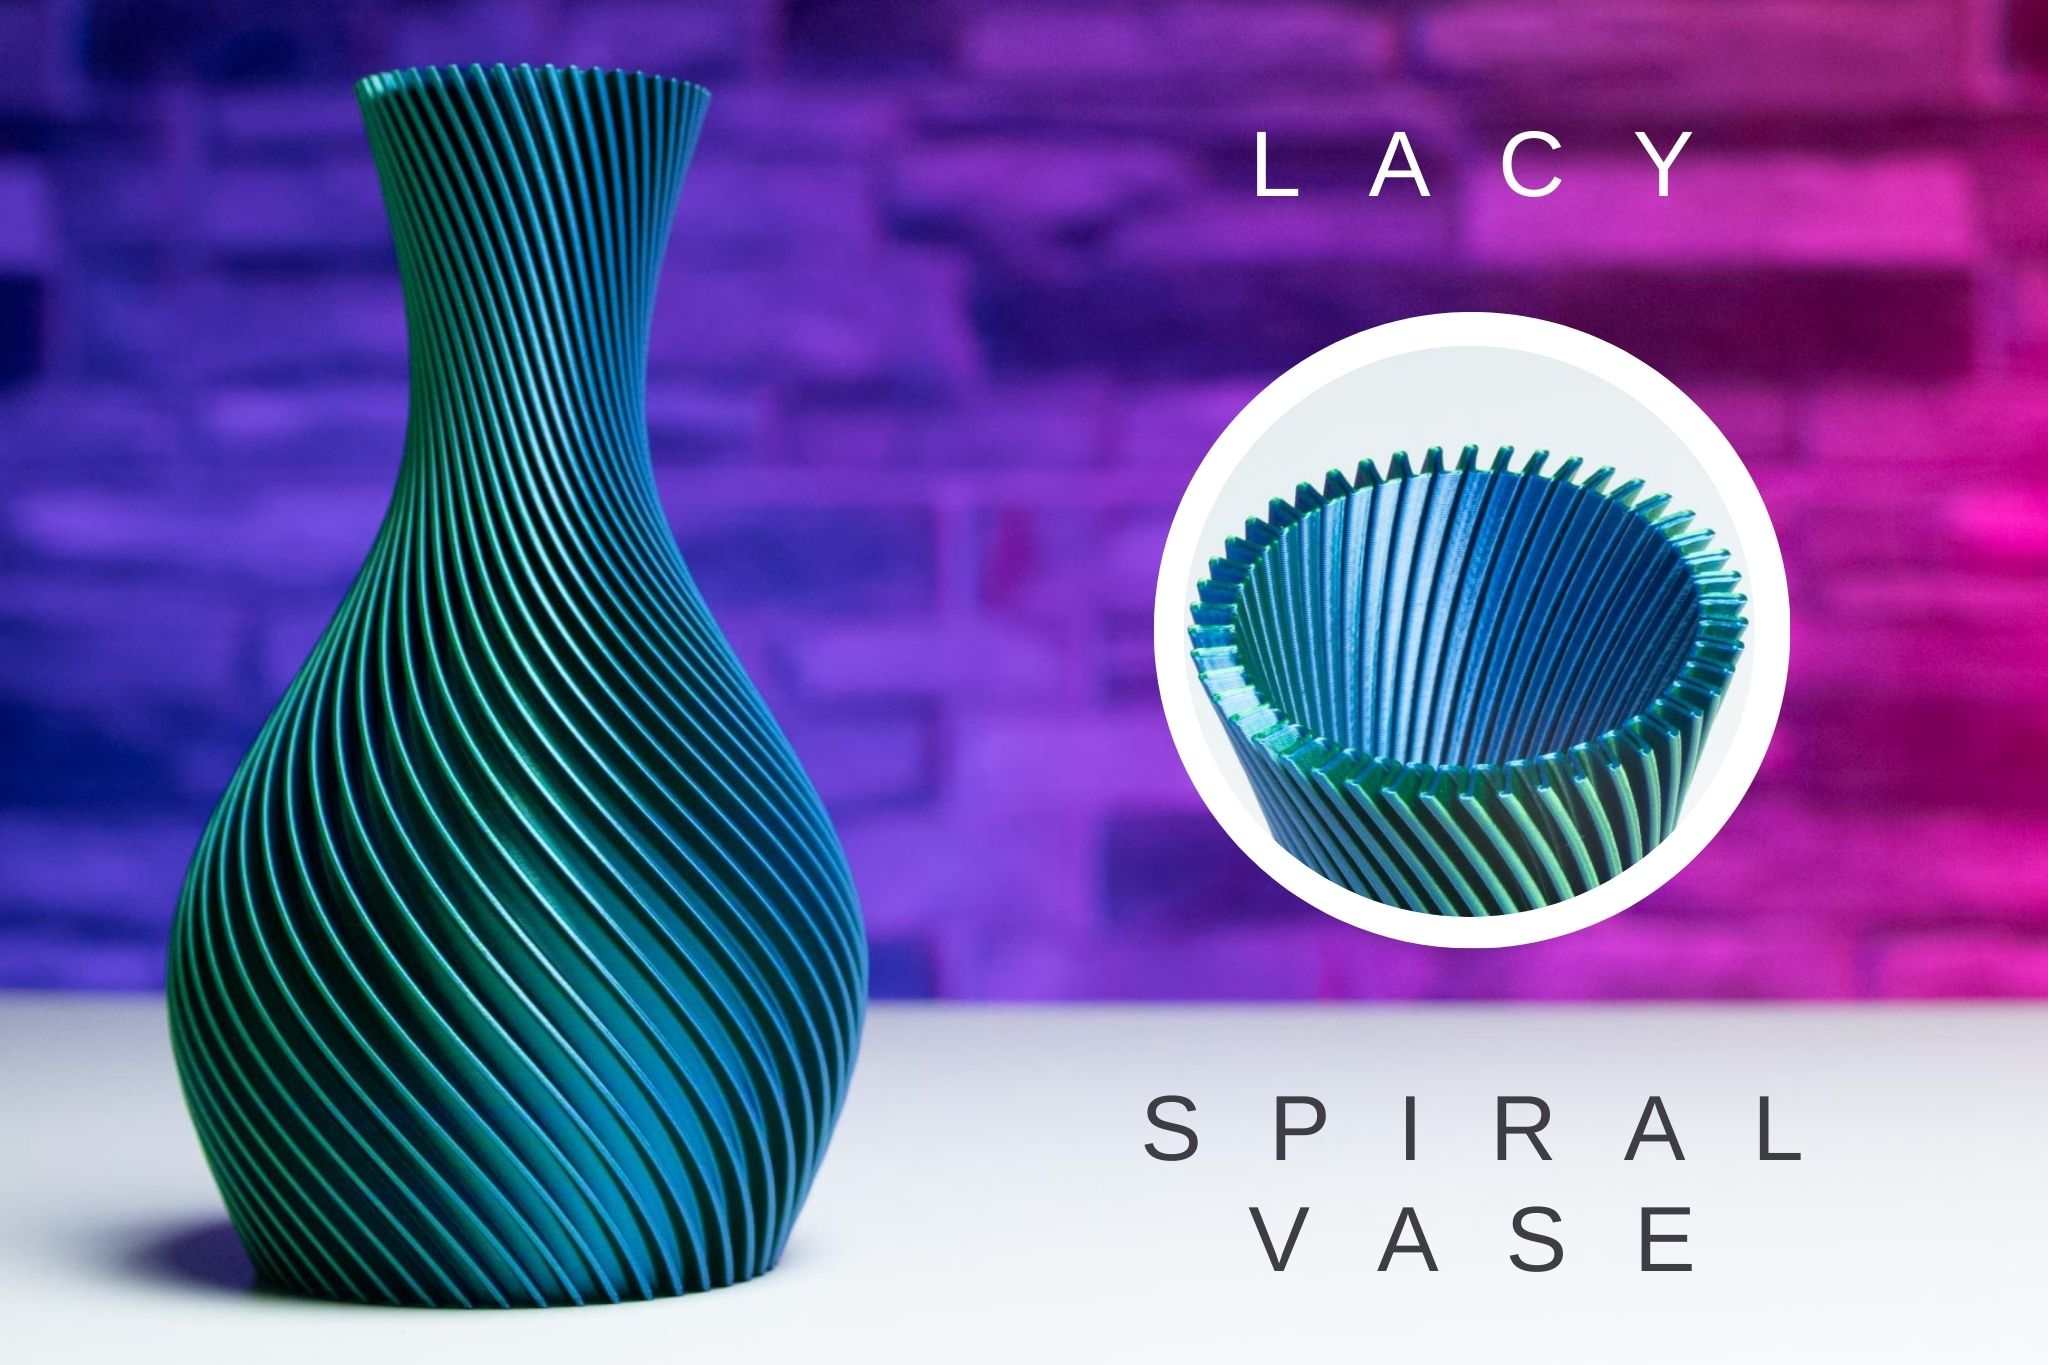 3D Printed Spiral Vase LACY